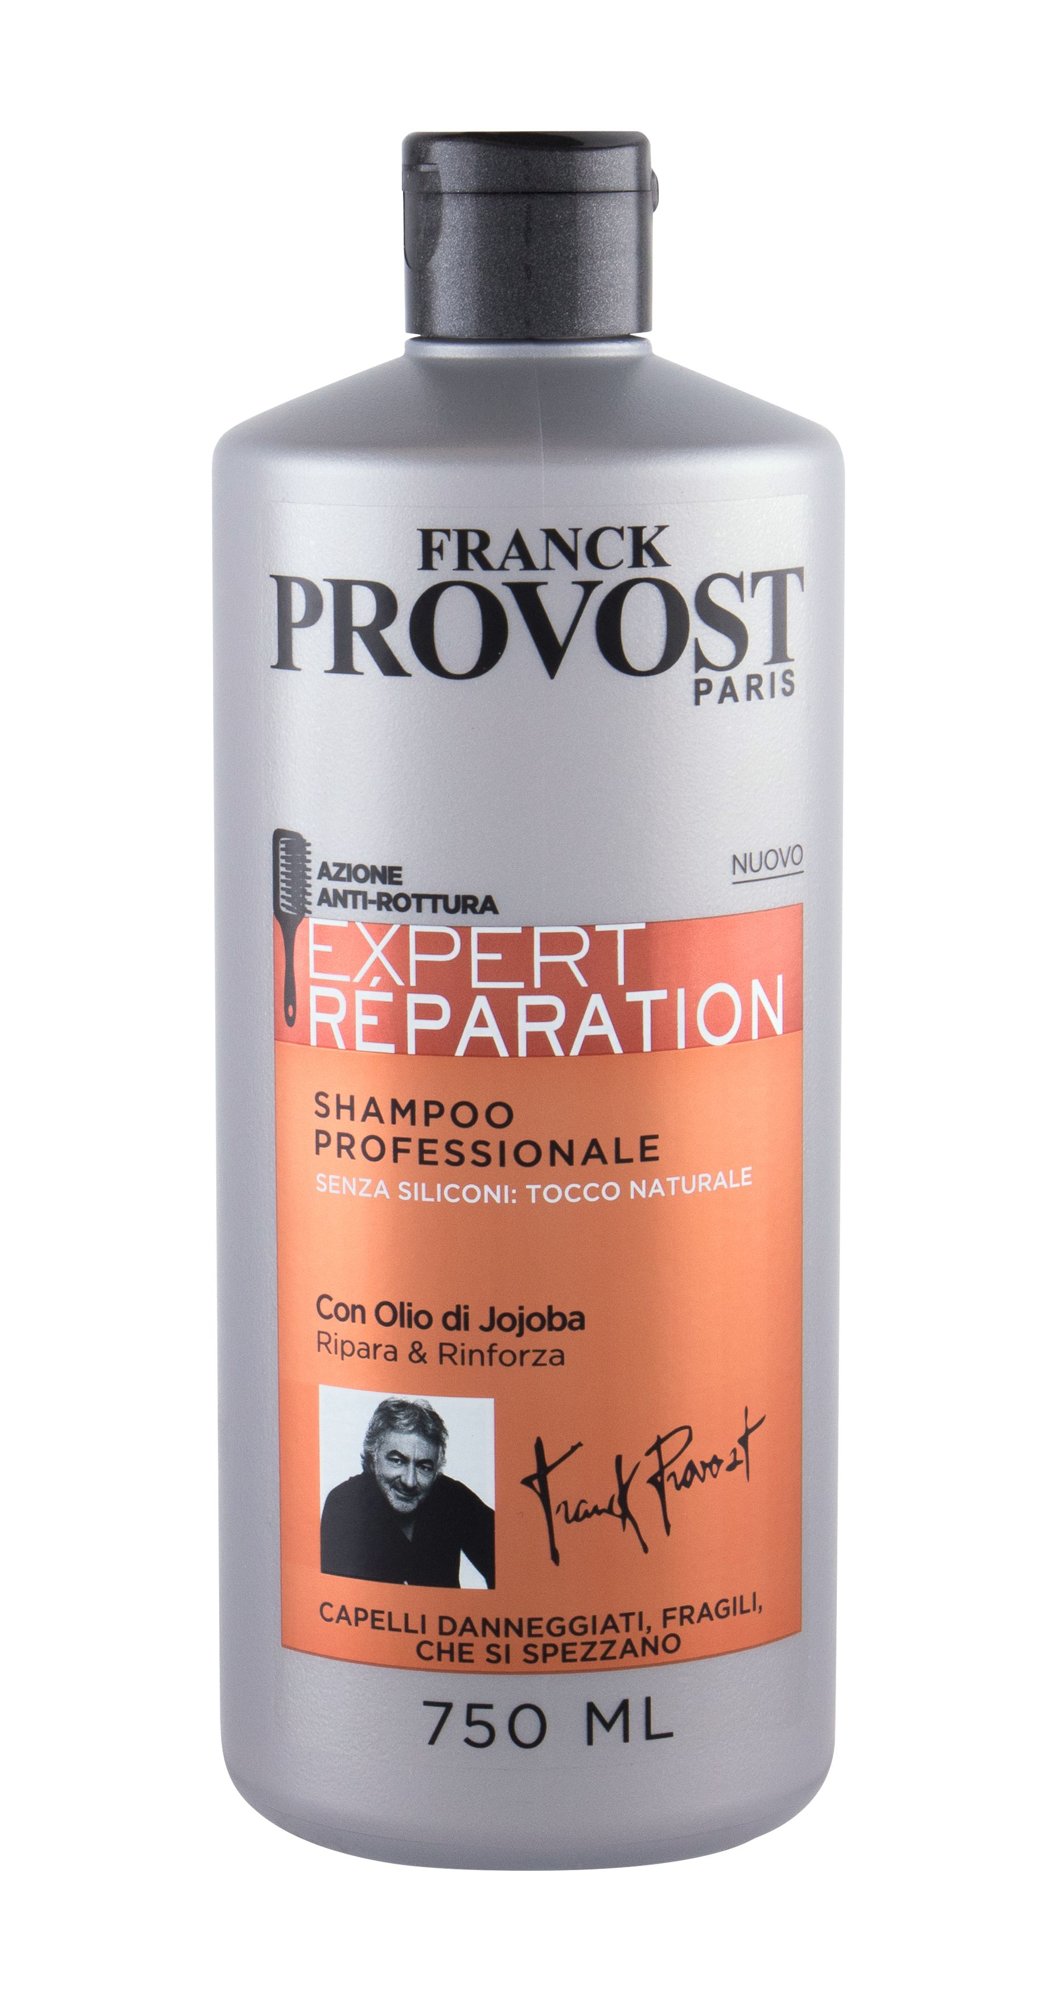 FRANCK PROVOST PARIS Shampoo Professional Repair 750ml šampūnas